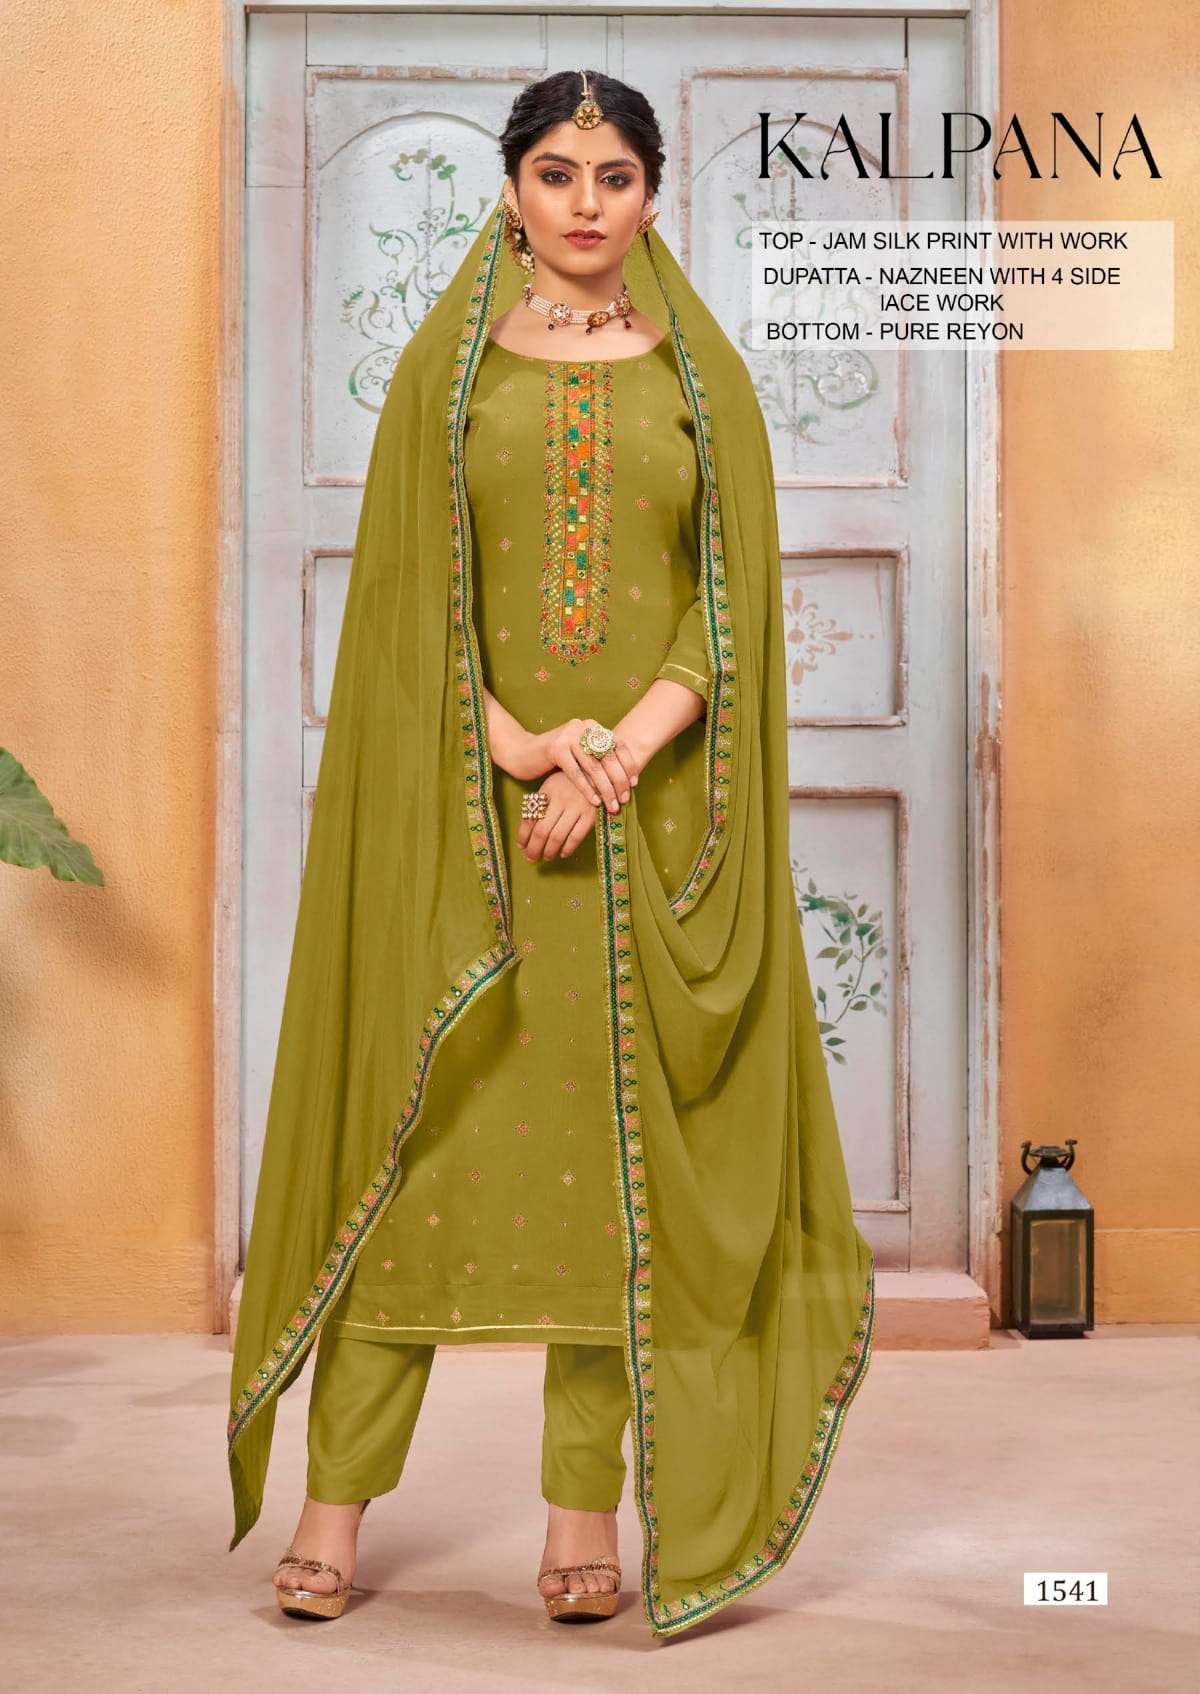 triple aaa kalpana jam silk women salwar kameez design with price 